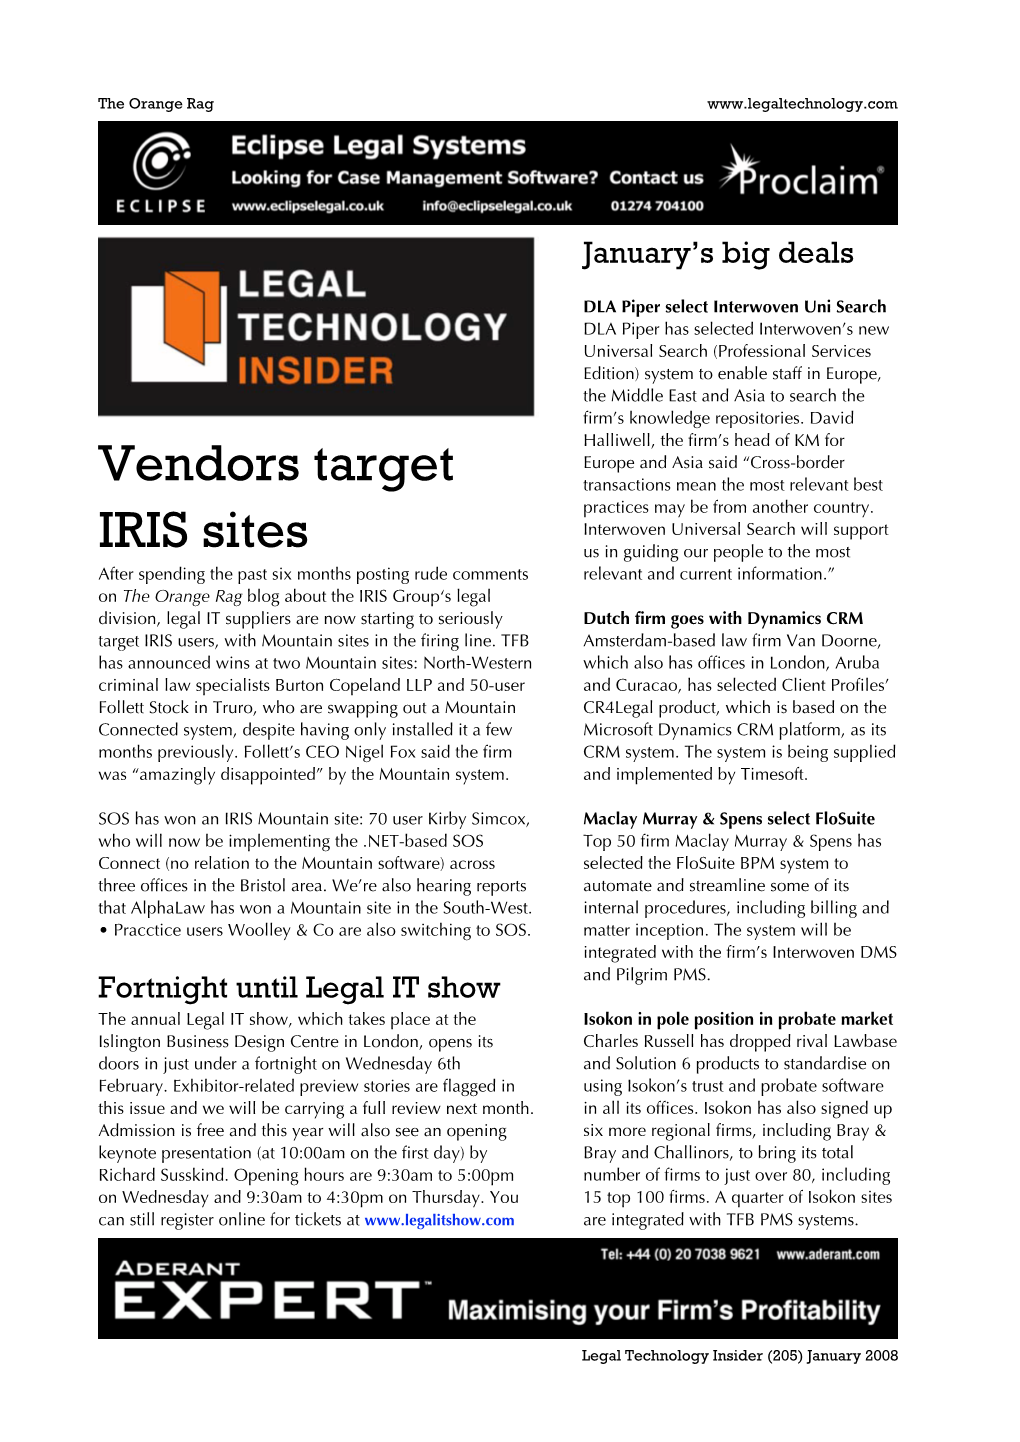 Vendors Target IRIS Sites